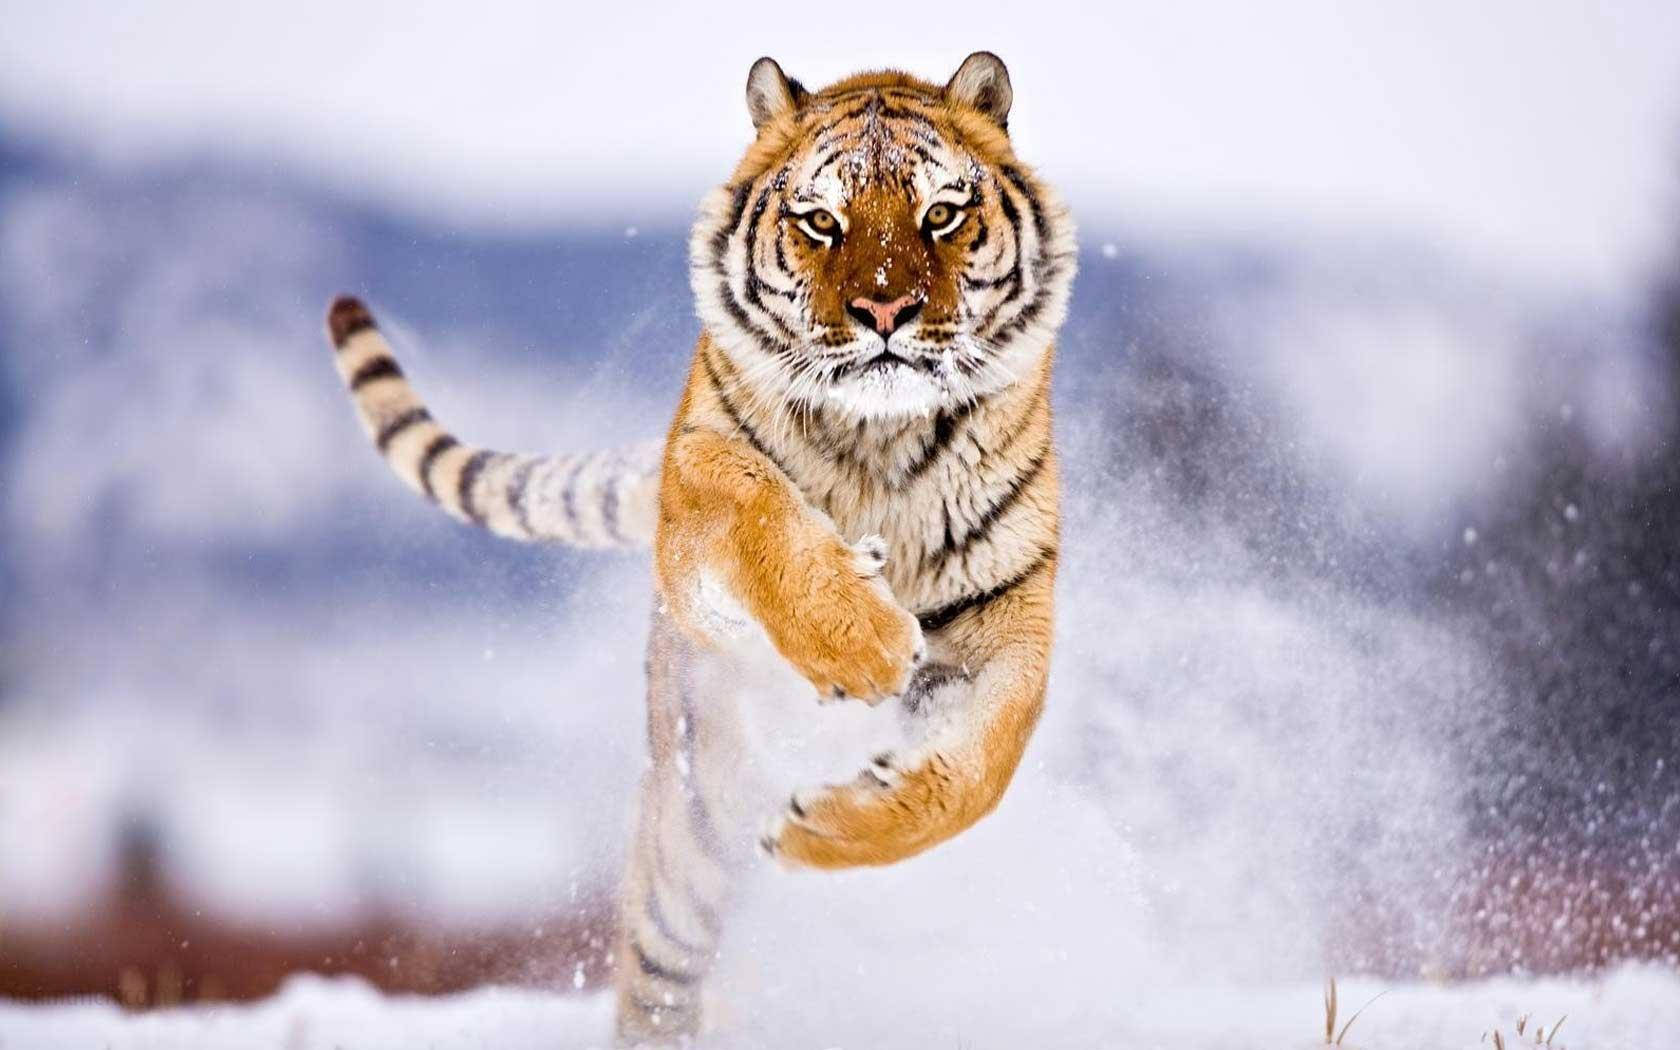 Tiger Animal Running In Snow Background